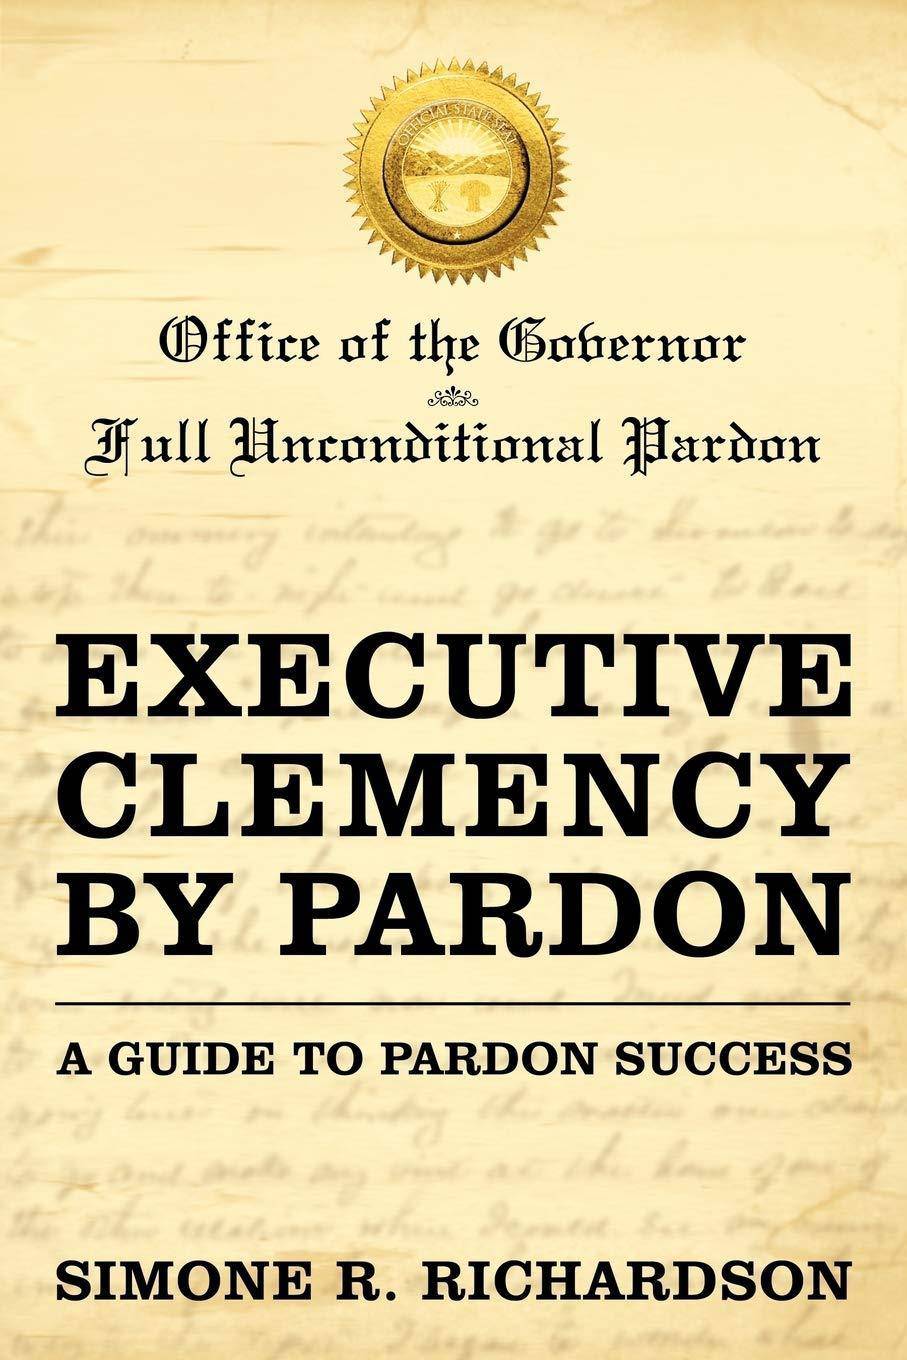 Executive Clemency by Pardon - SureShot Books Publishing LLC